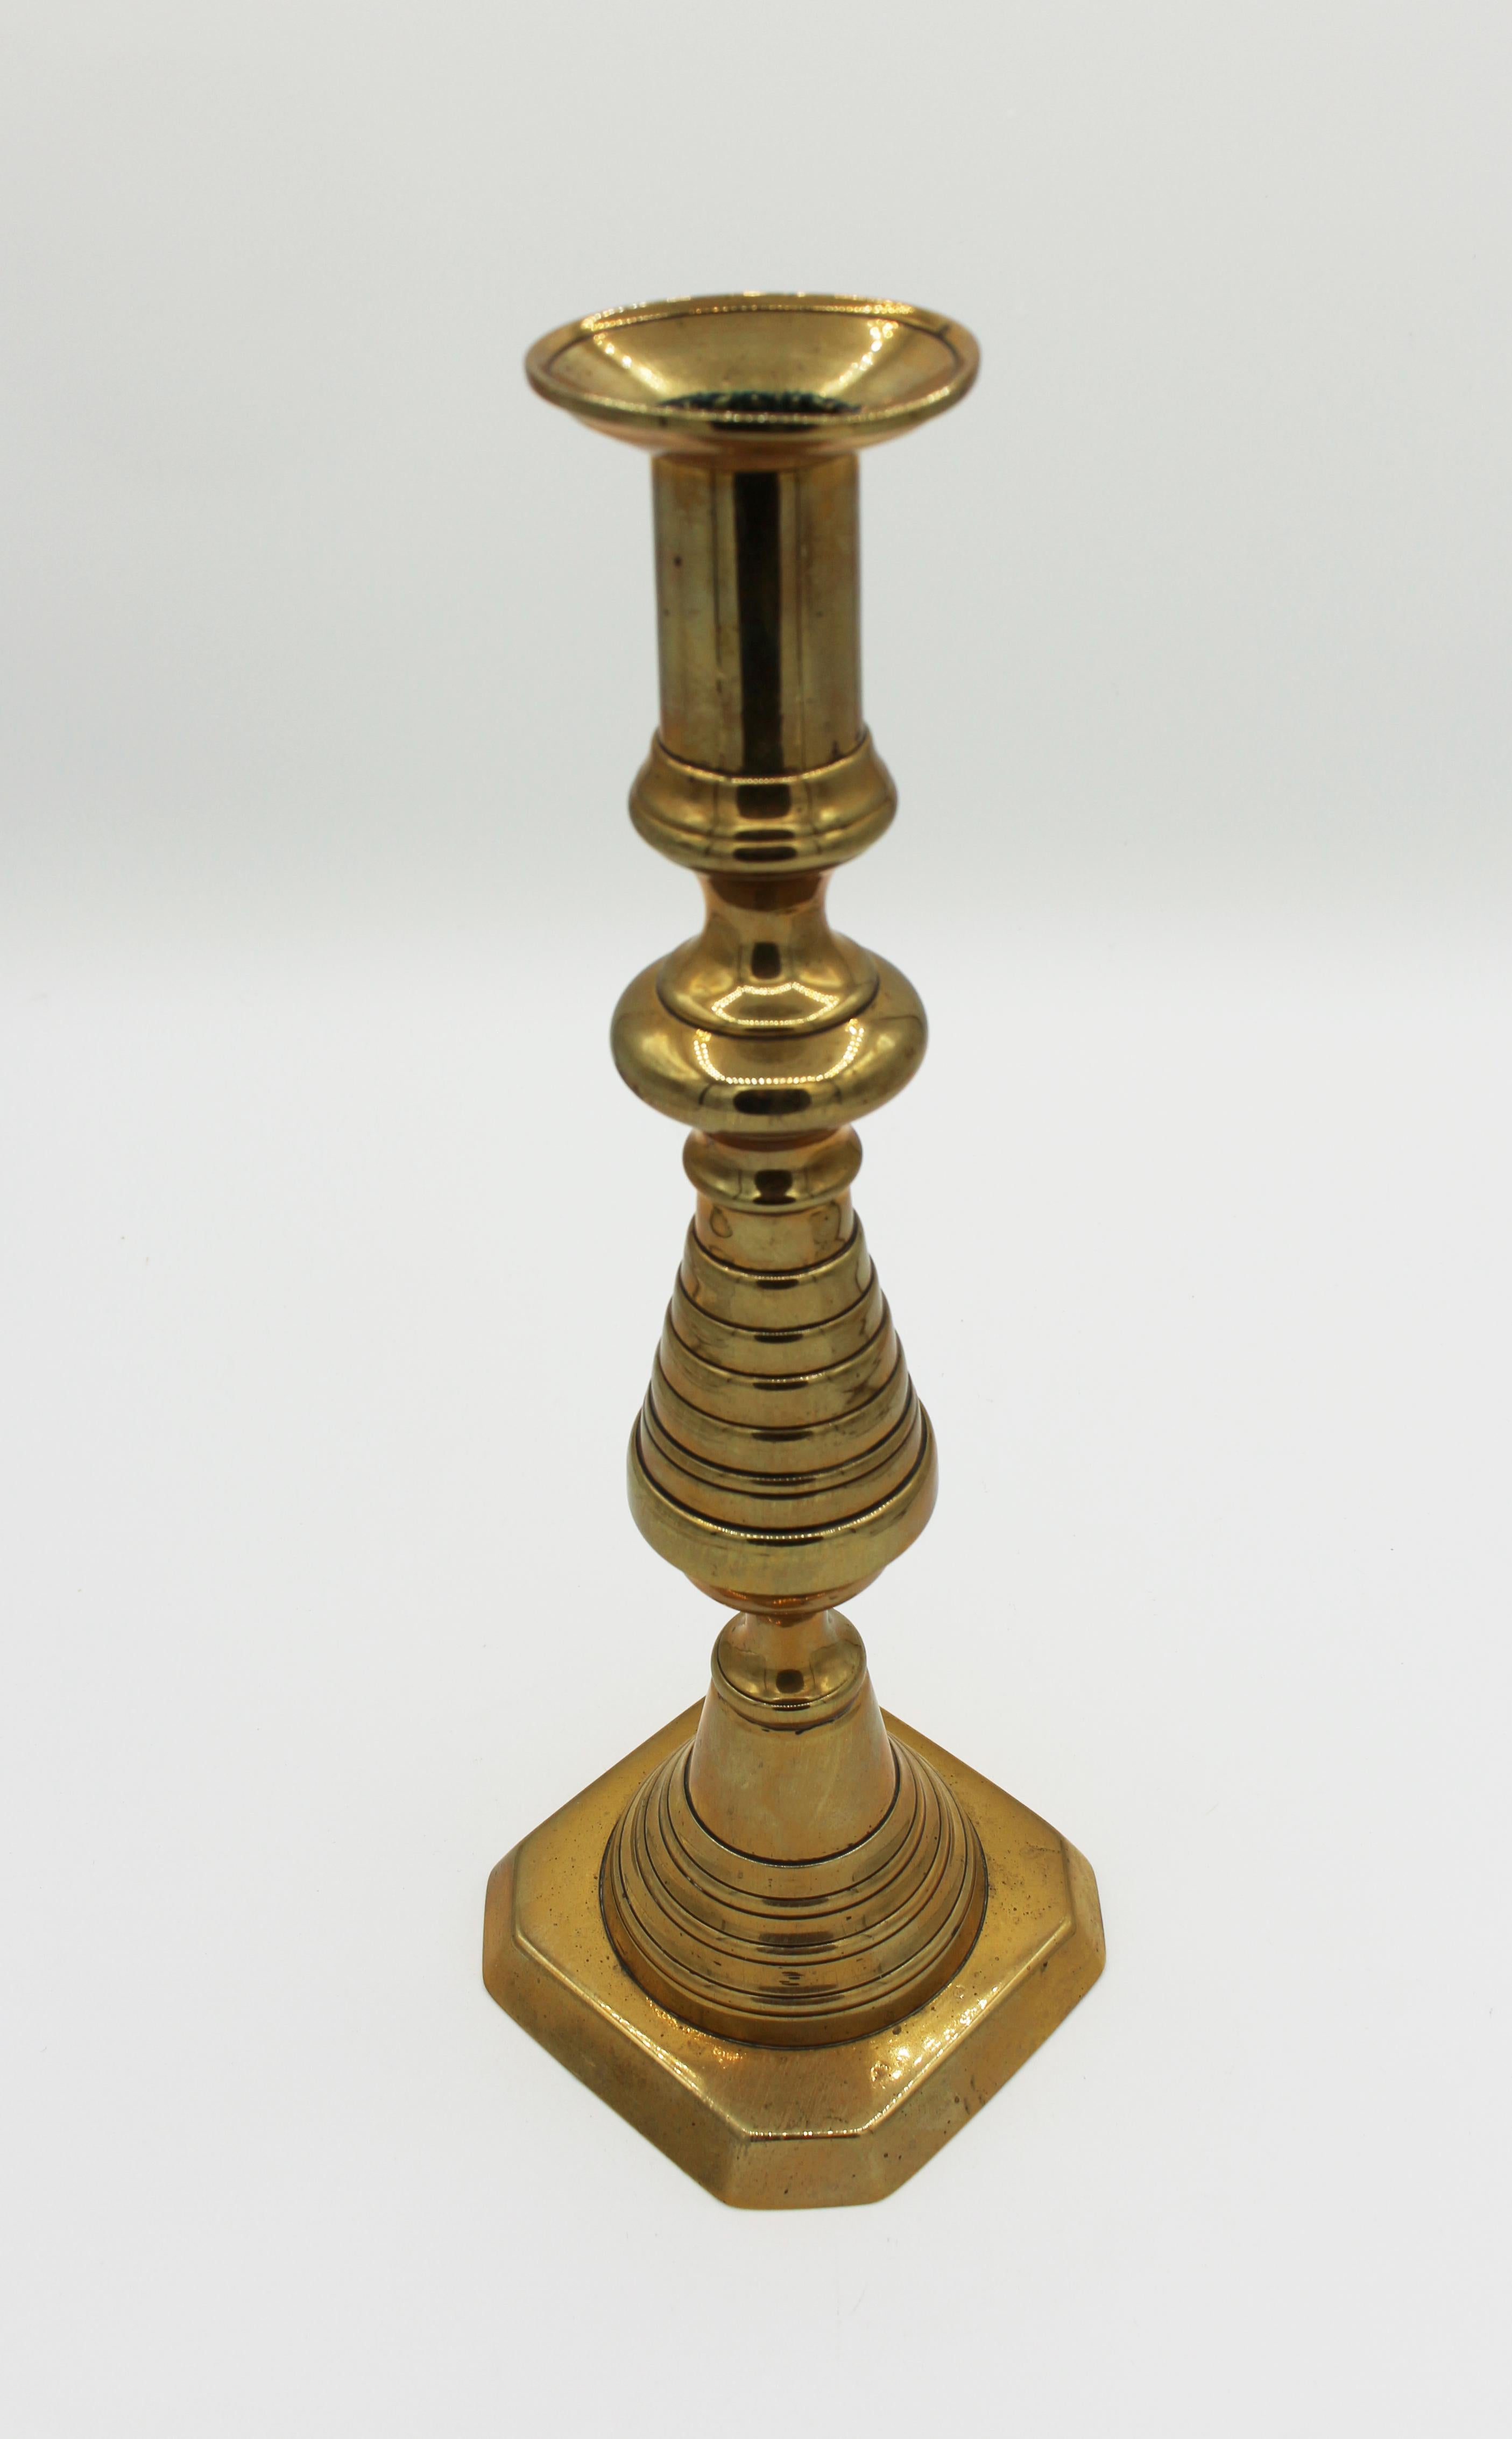 Circa 1860 English Brass Candlesticks, a Pair For Sale 1